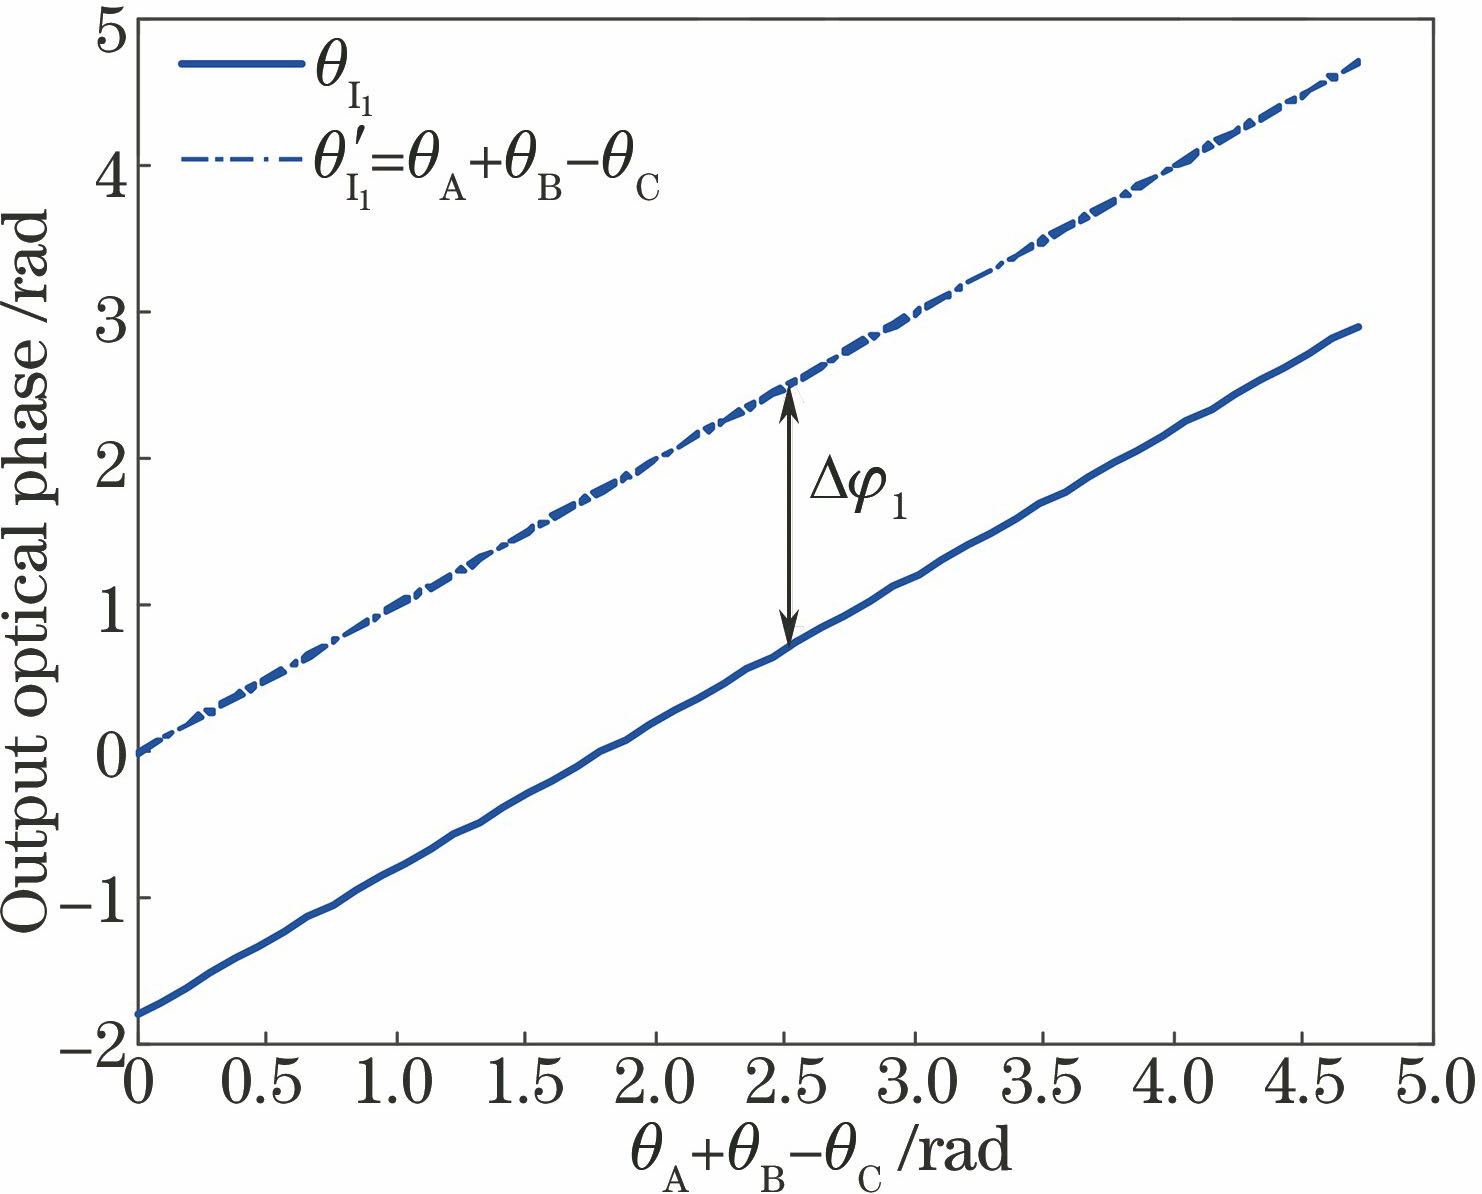 Idler1' phase versus input signal phase θA+θB-θC for six-wave coupling